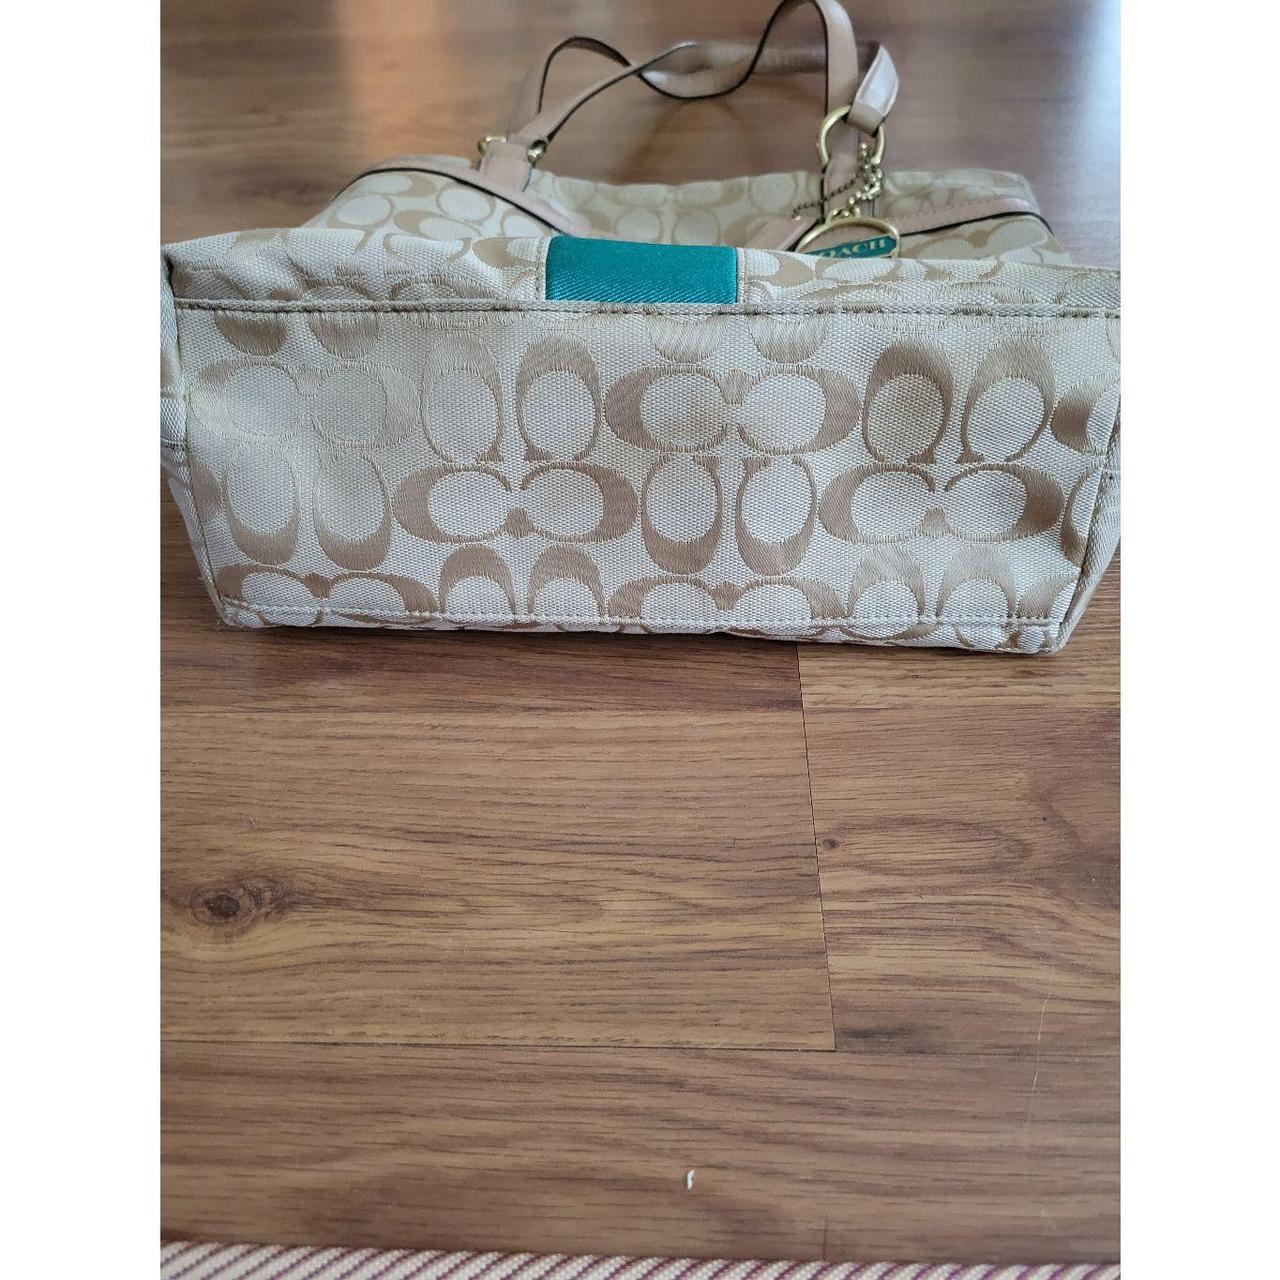 Product Image 2 - Coach signature striped purse. Tote